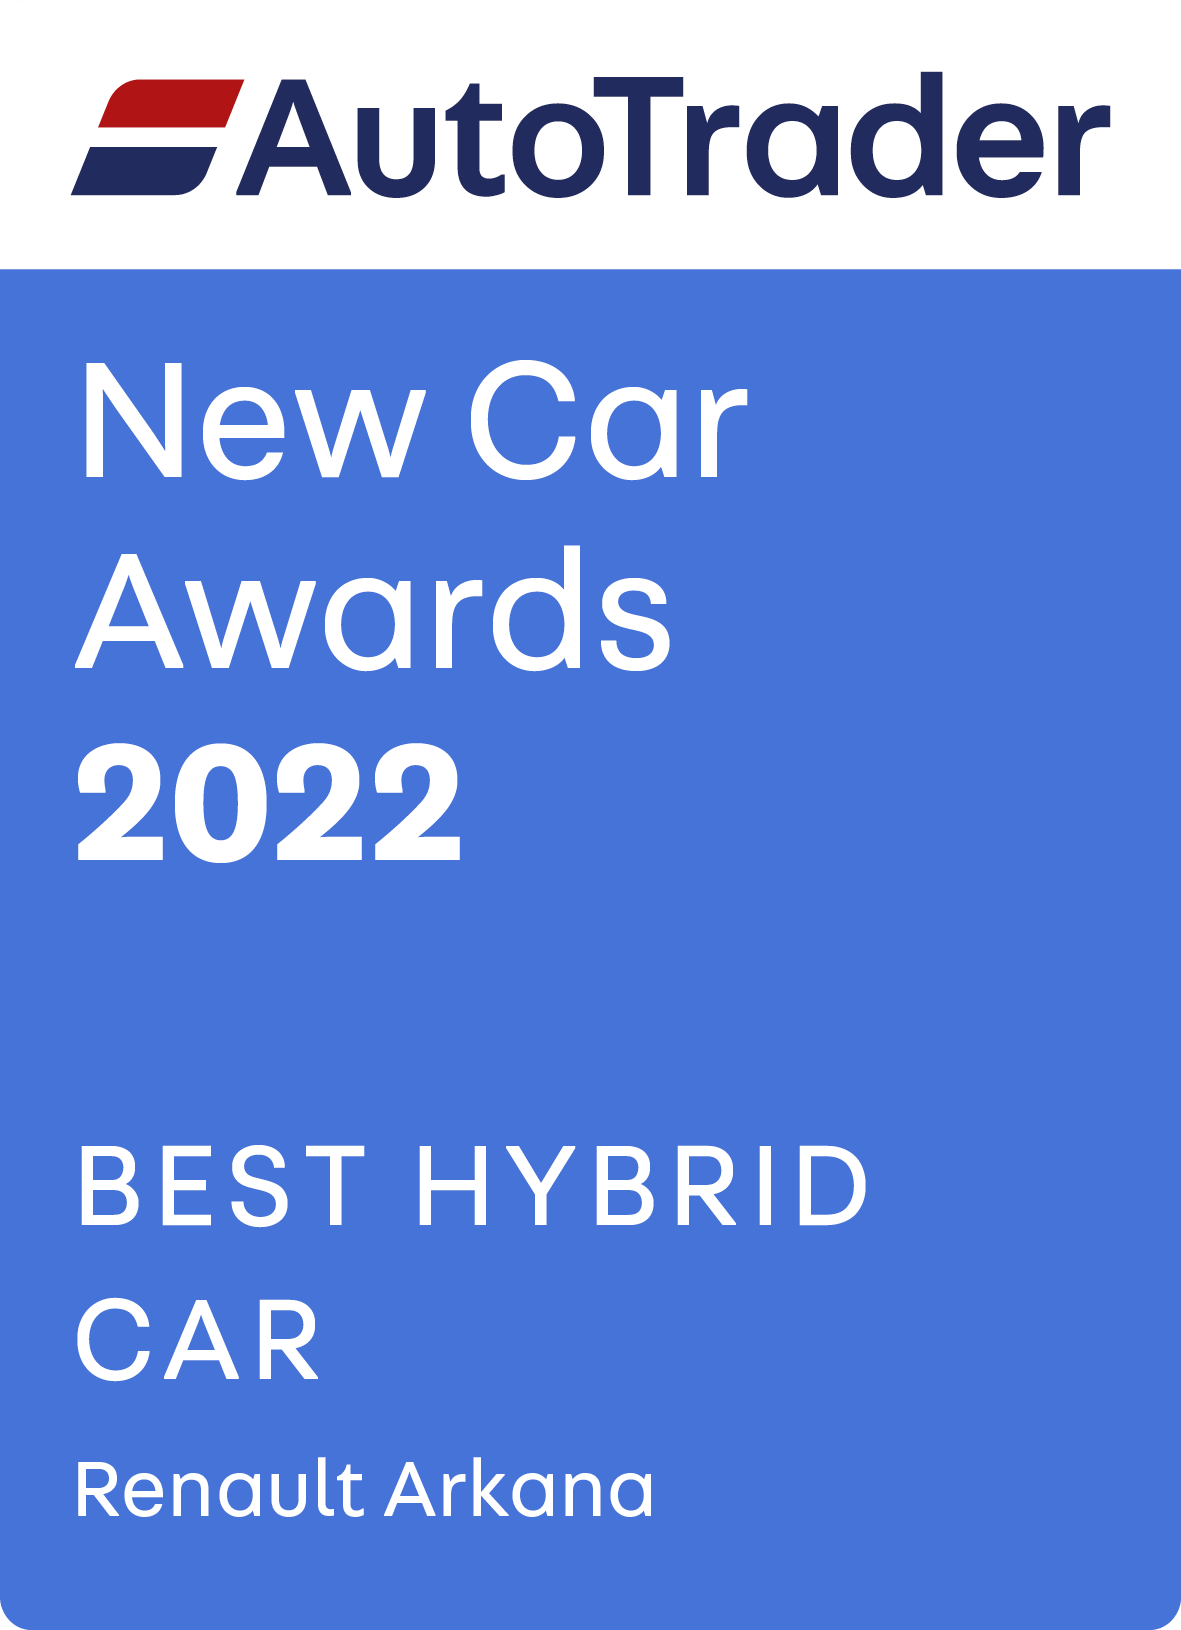 Renault Arkana - New Car Award 2022